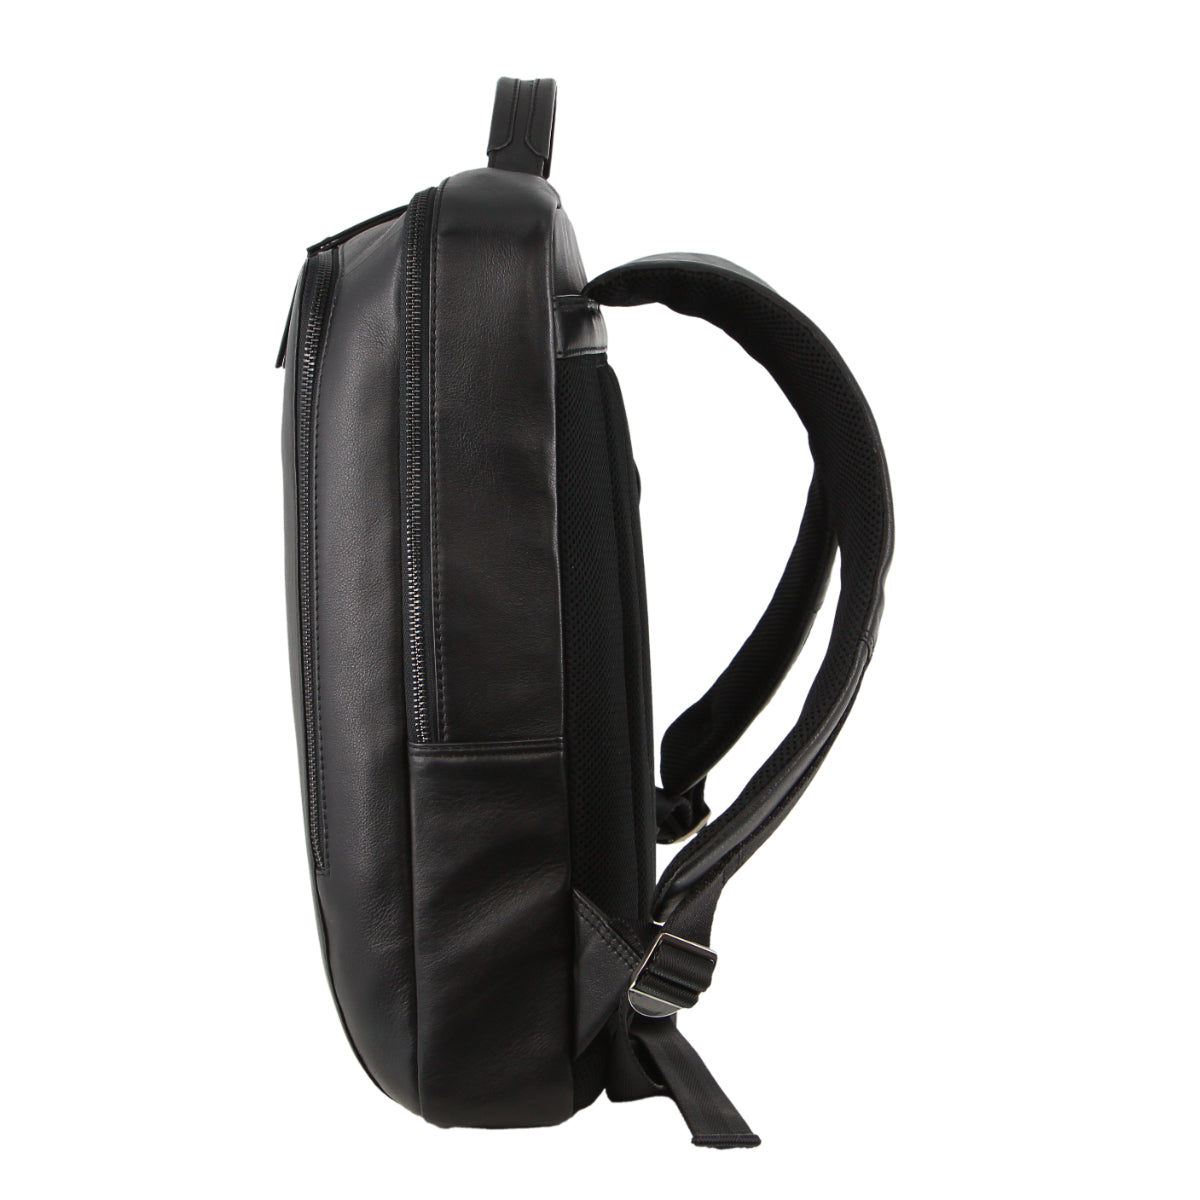 Pierre Cardin Men's Leather Business/Laptop Bag in Black